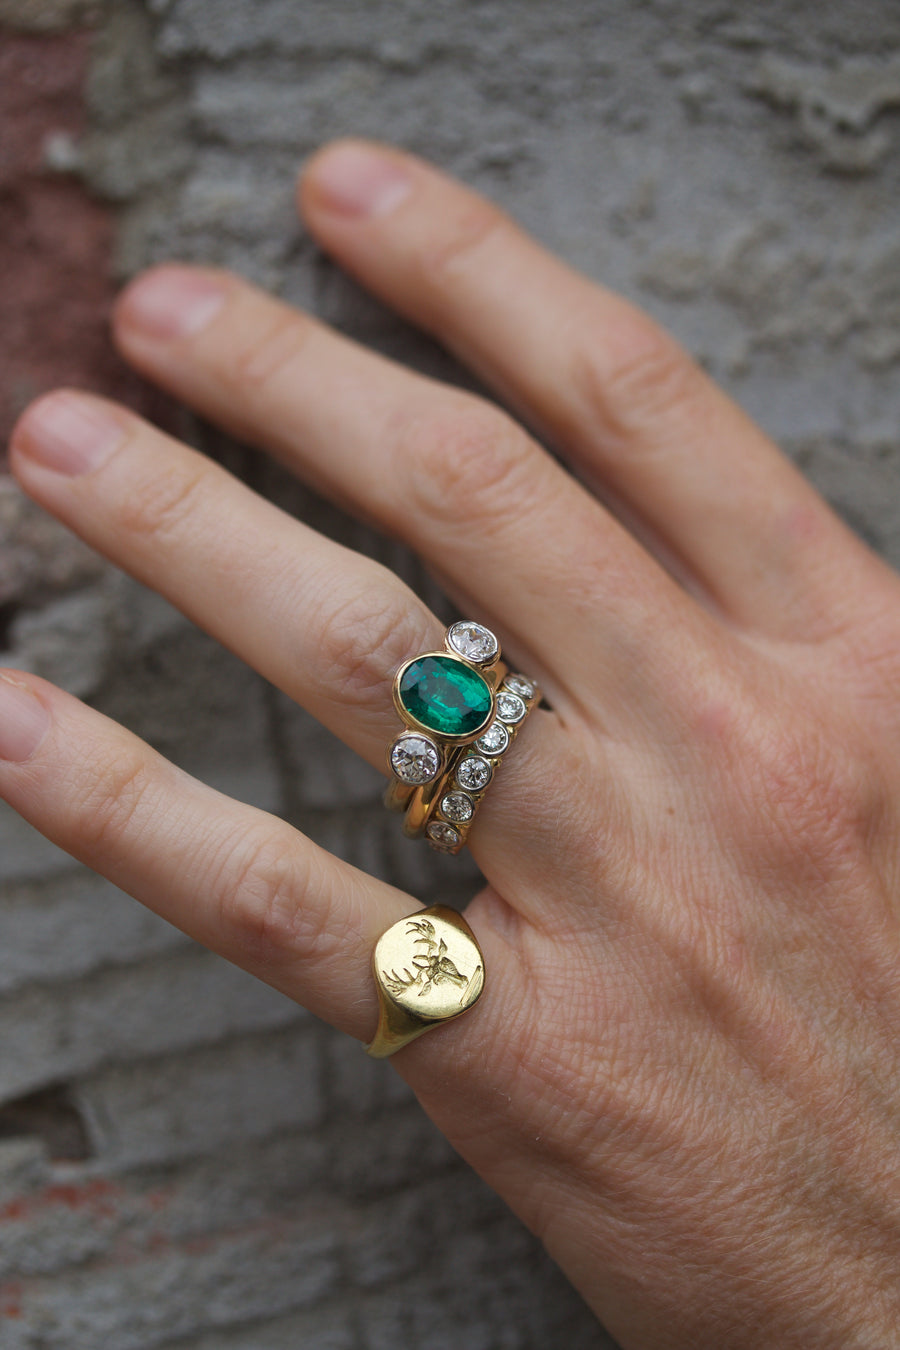 Emerald & European Cut Diamond Ring